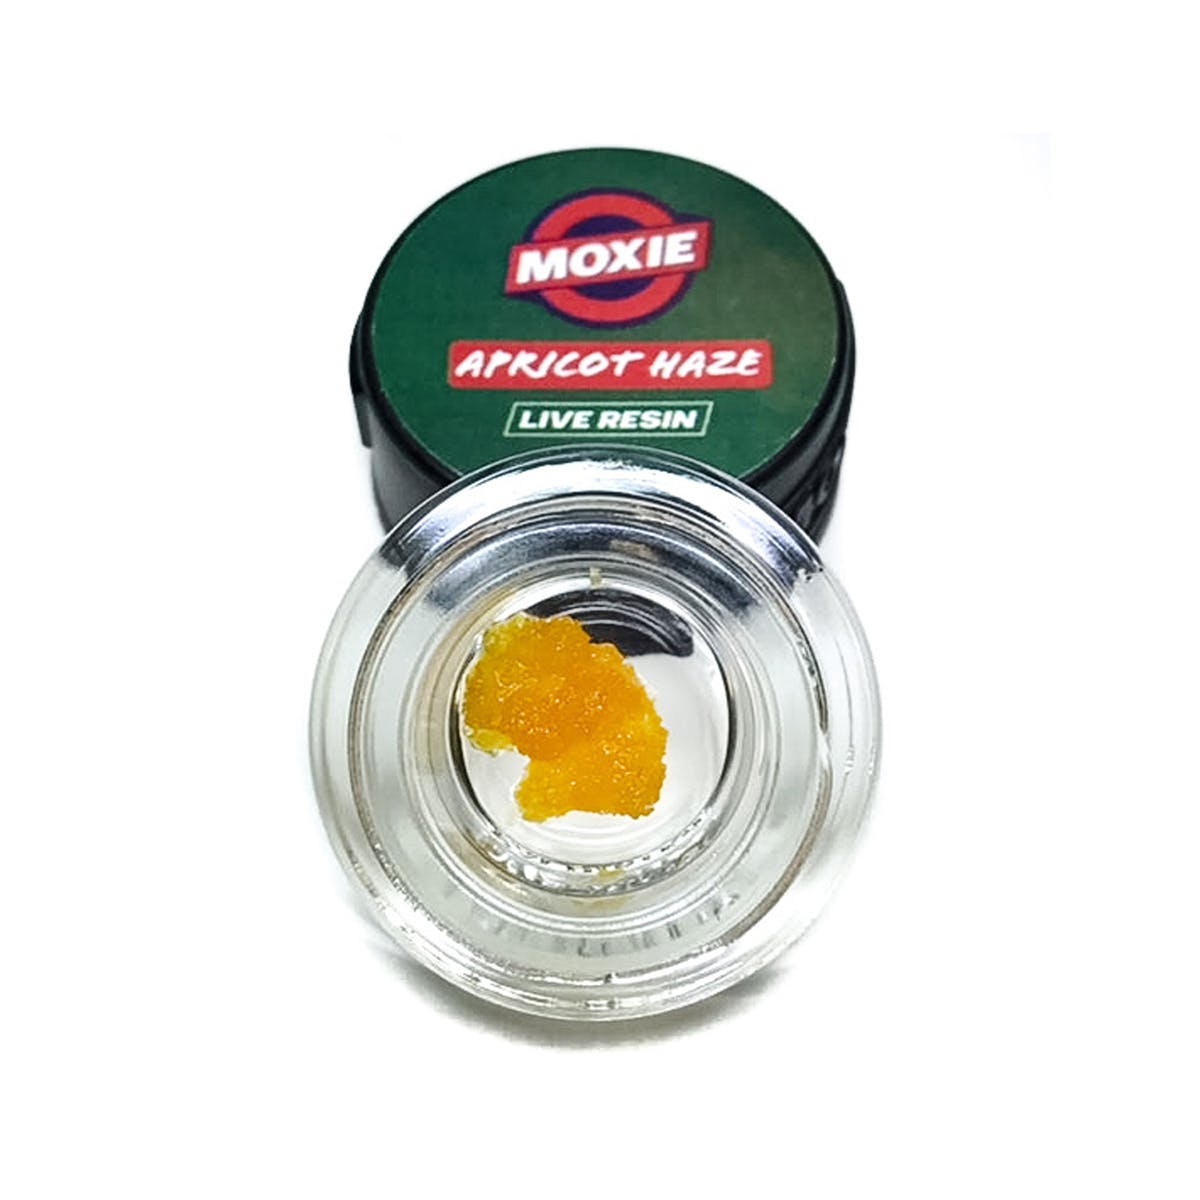 wax-moxie-apricot-haze-live-resin-sauce